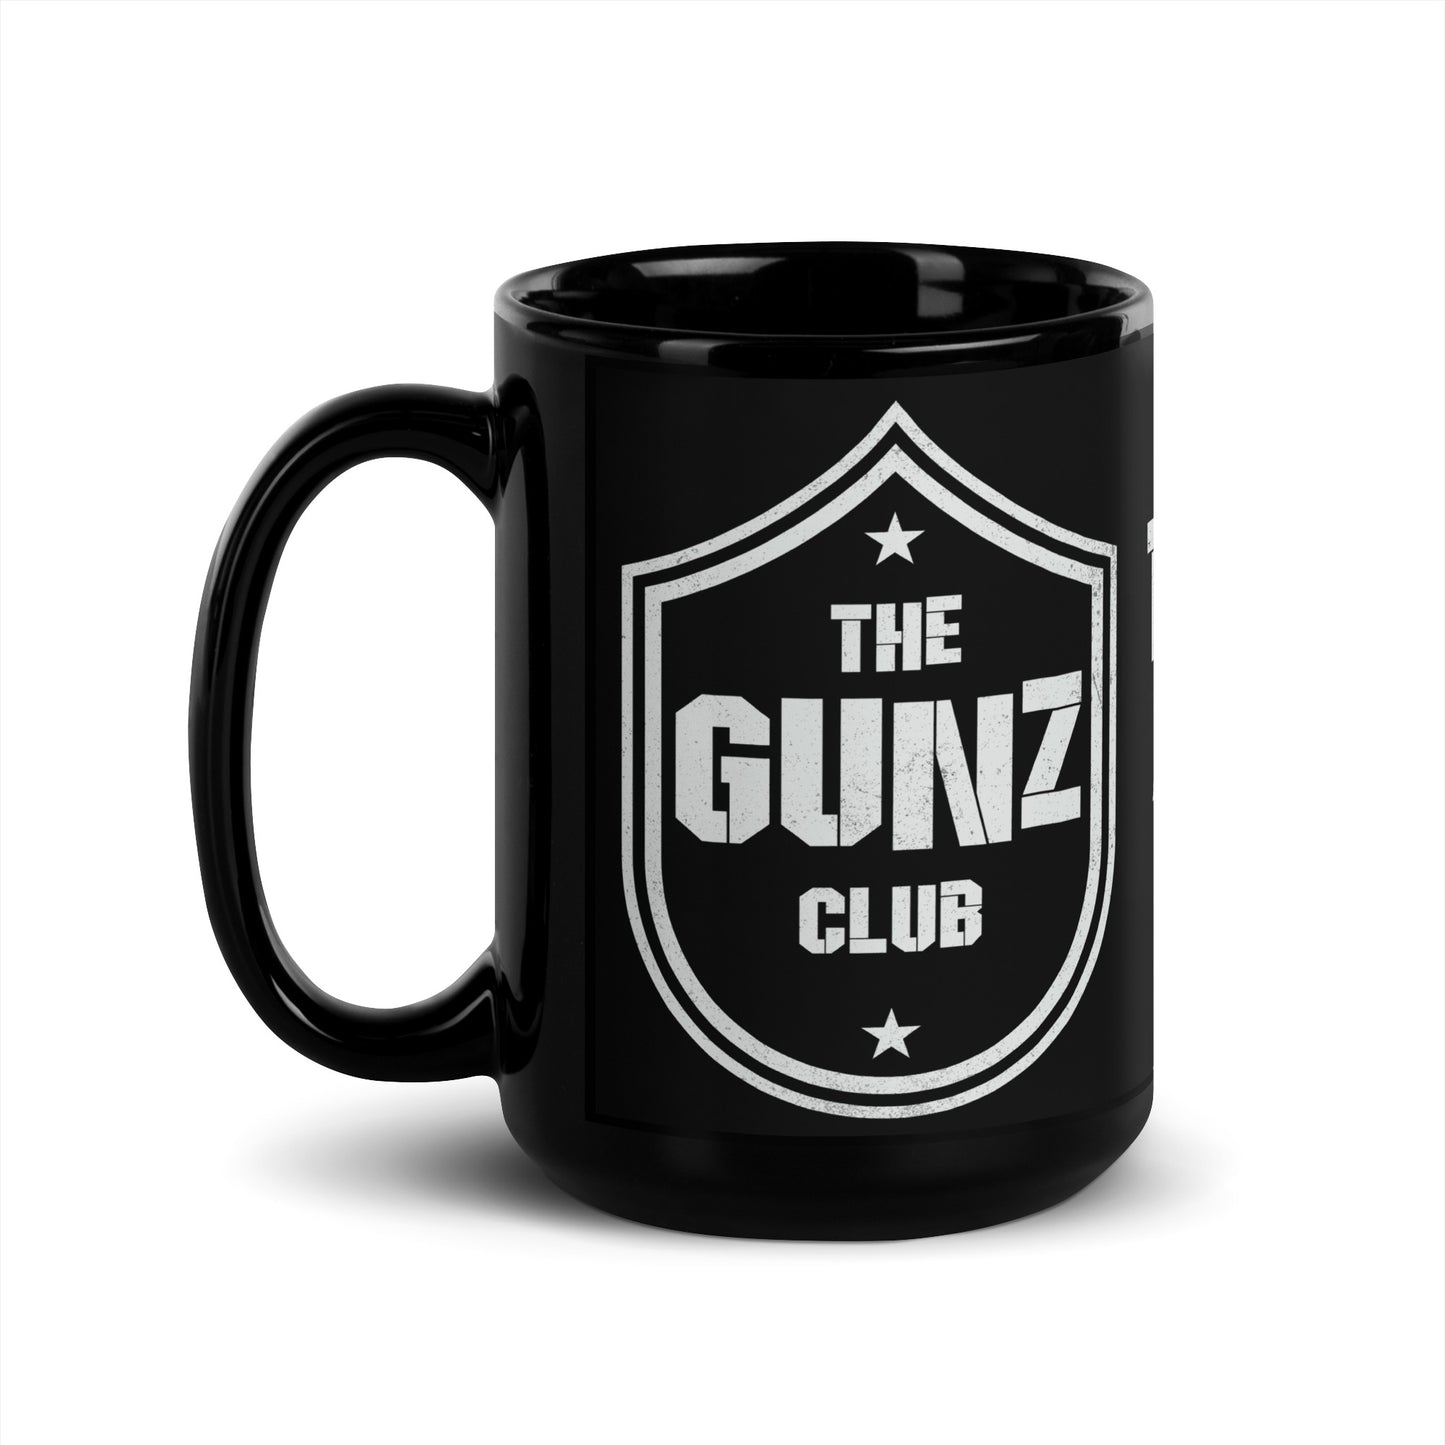 GUNZ CLUB COFFEE MUG